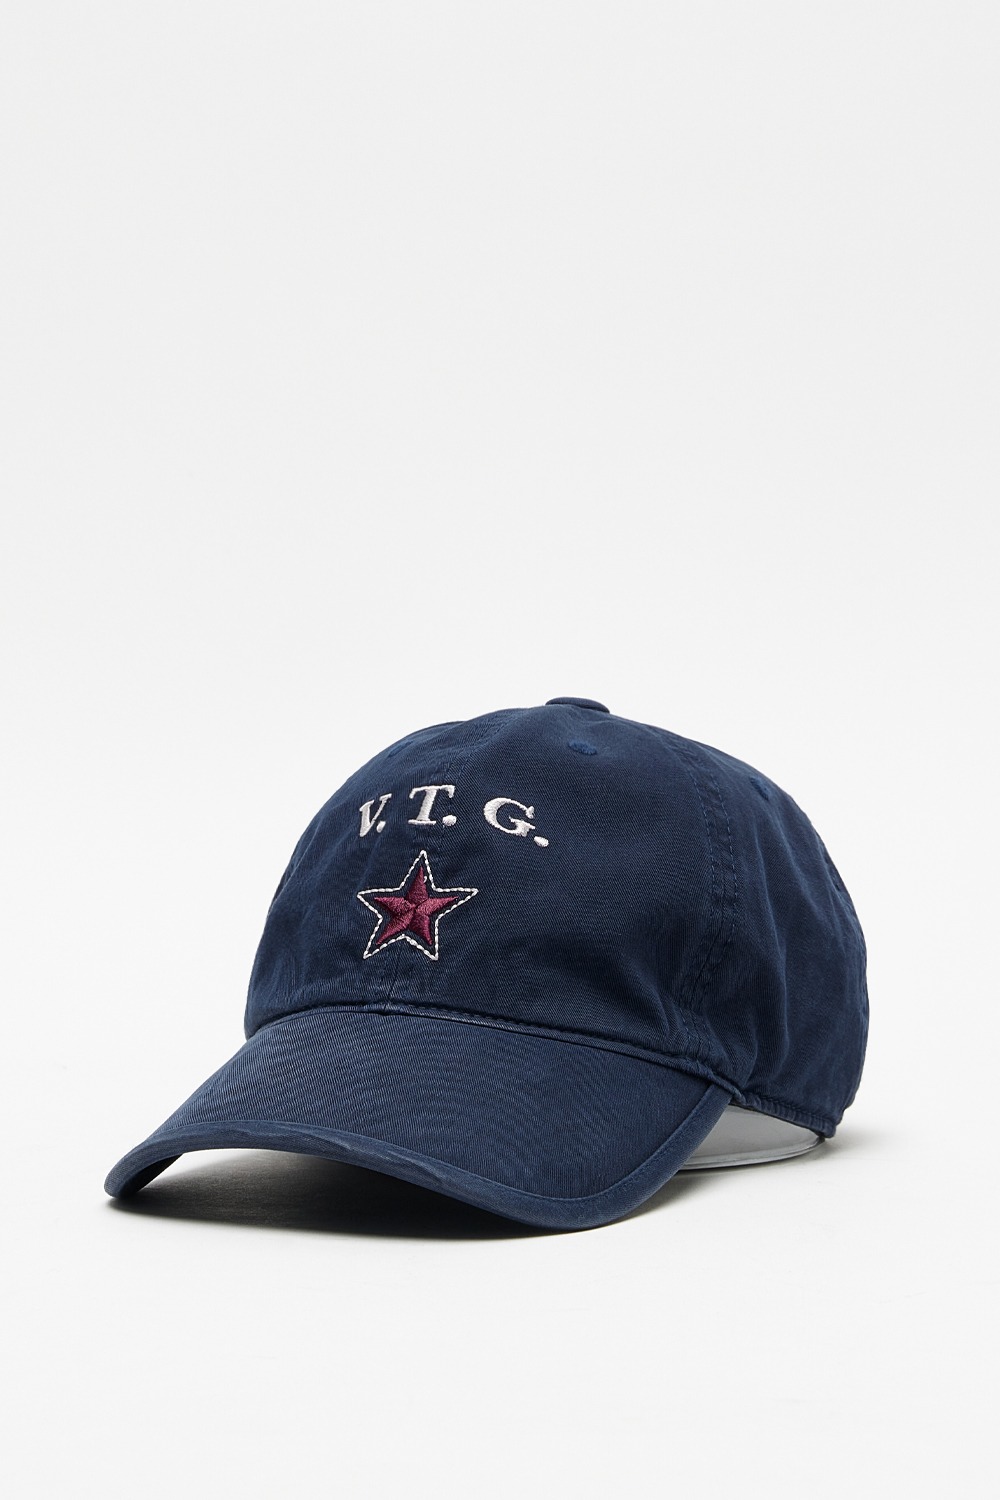 Vtg Star Cap - Dark Navy